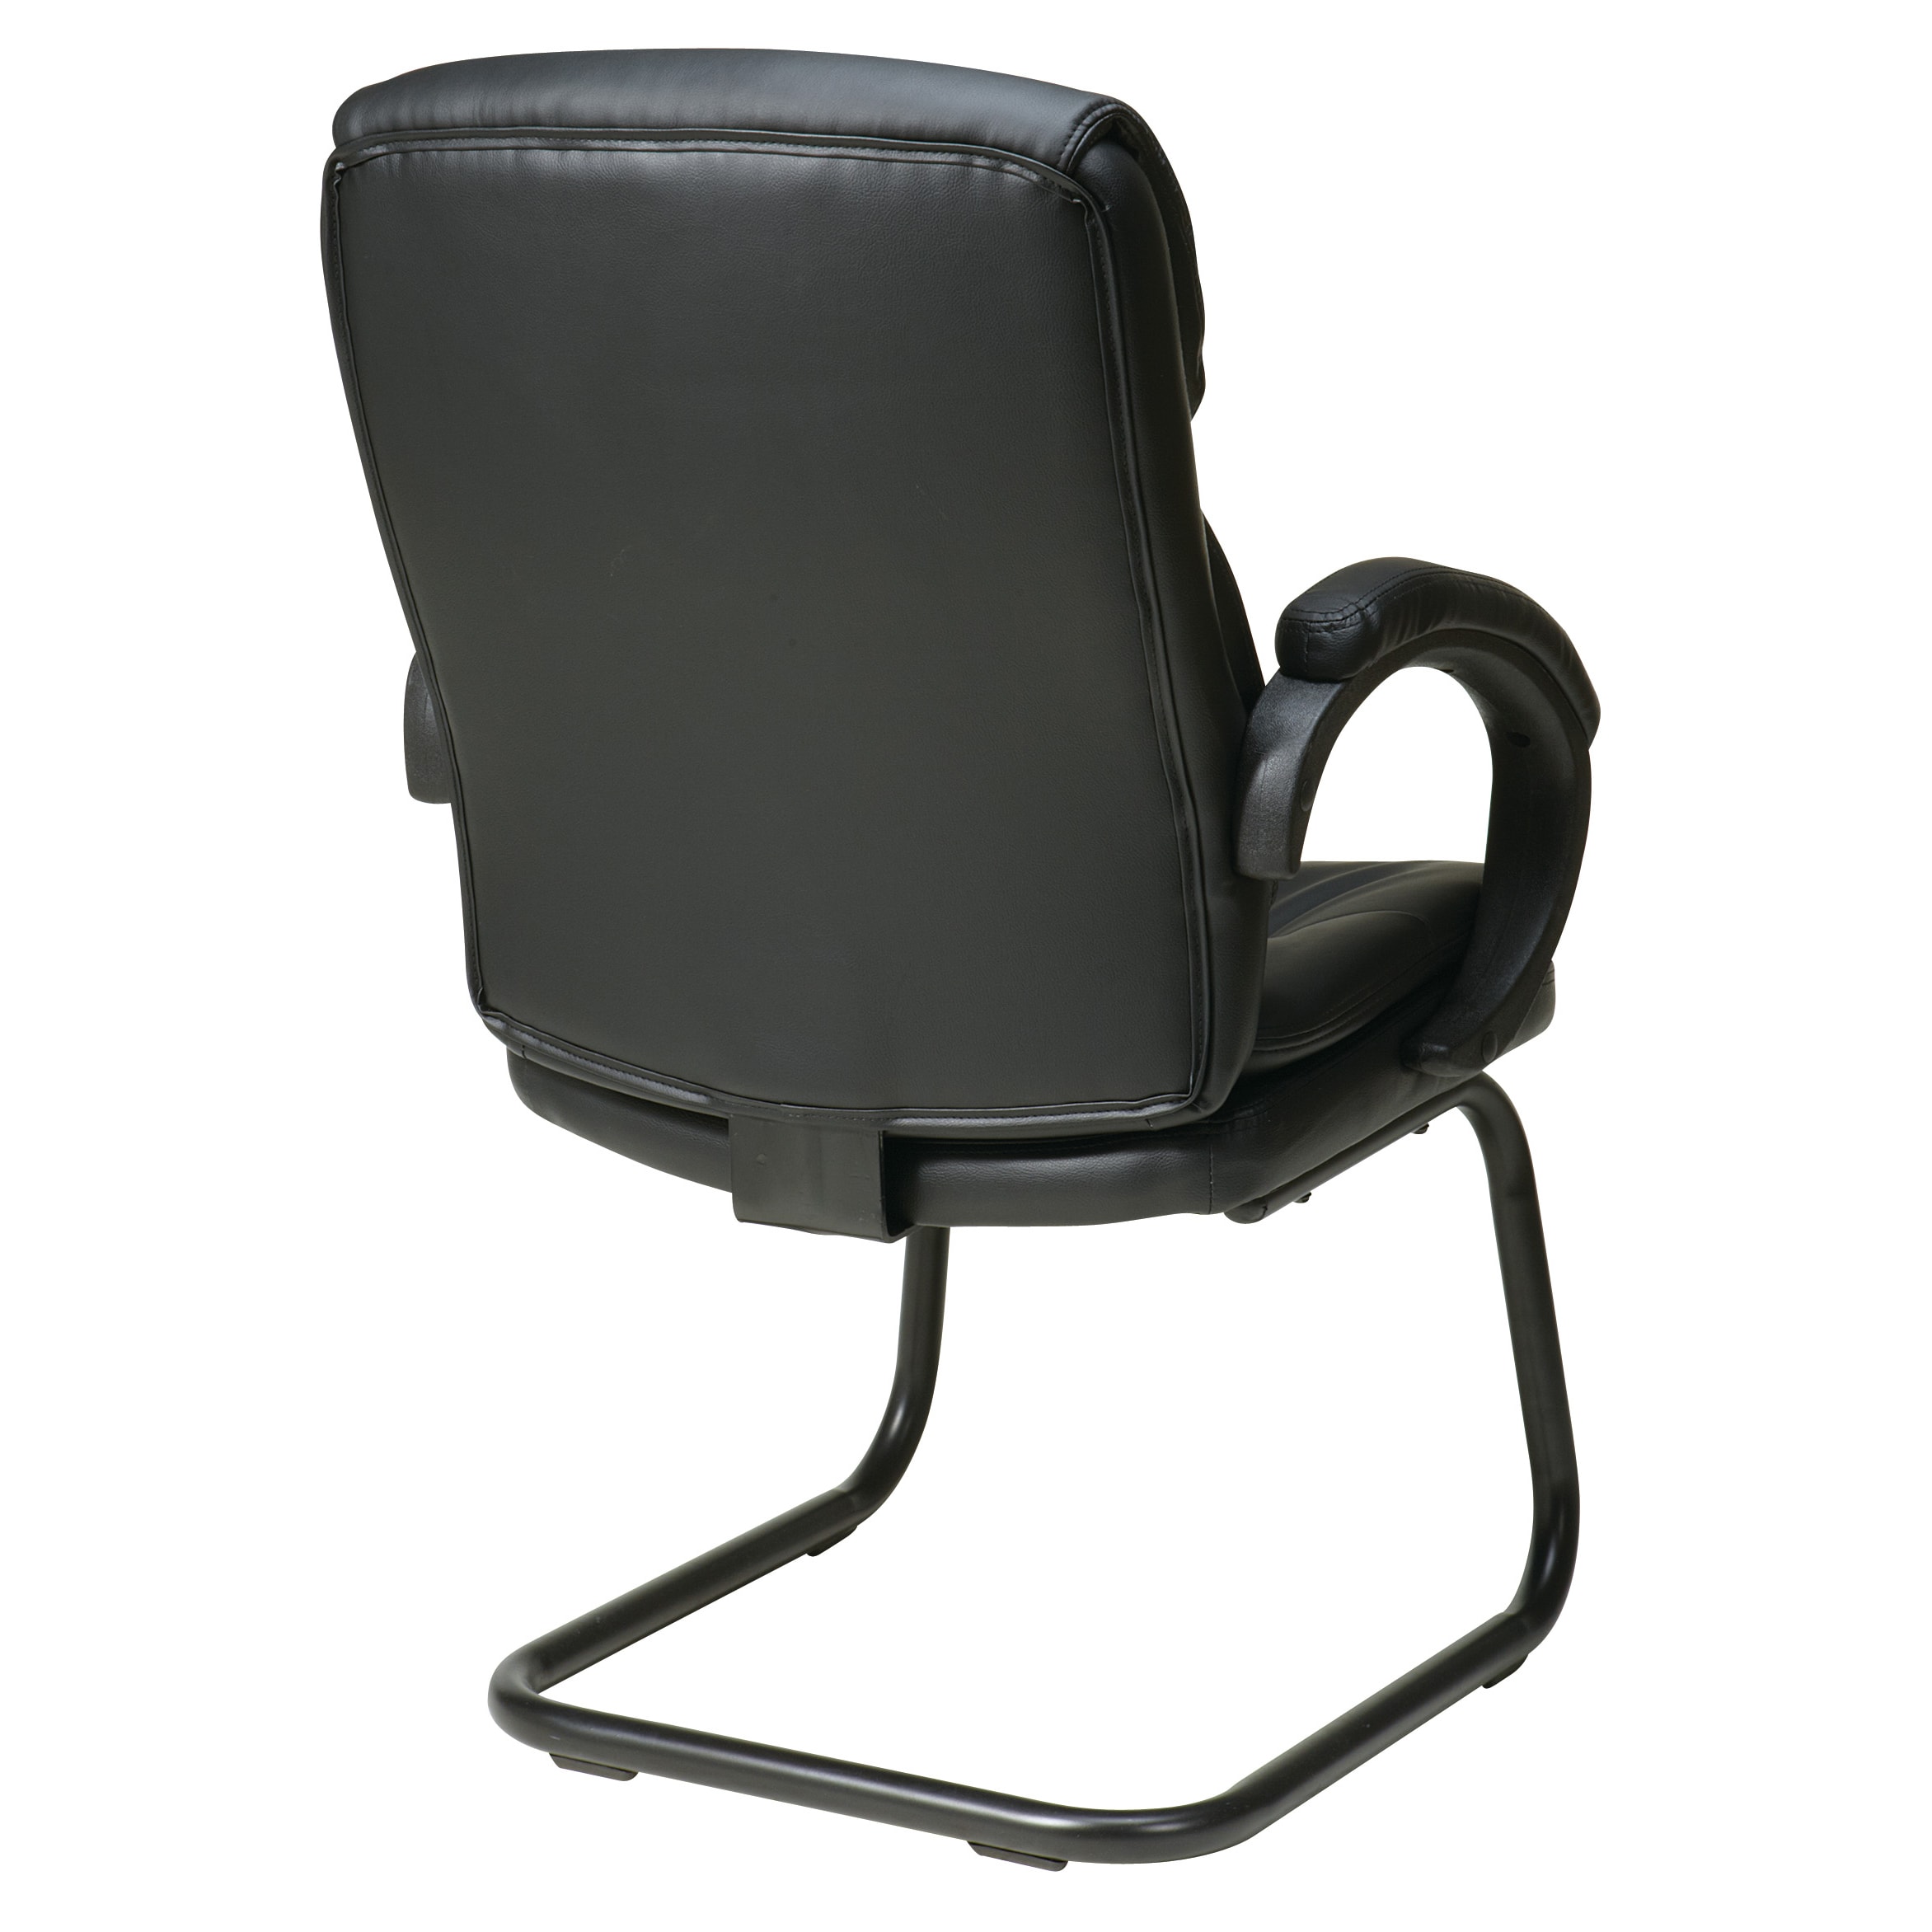 https://ak1.ostkcdn.com/images/products/7986433/Work-Smart-Black-Eco-Leather-Contour-Visitors-Chair-6579cd73-1dc5-4249-b782-a0f5d36dfcba.jpg